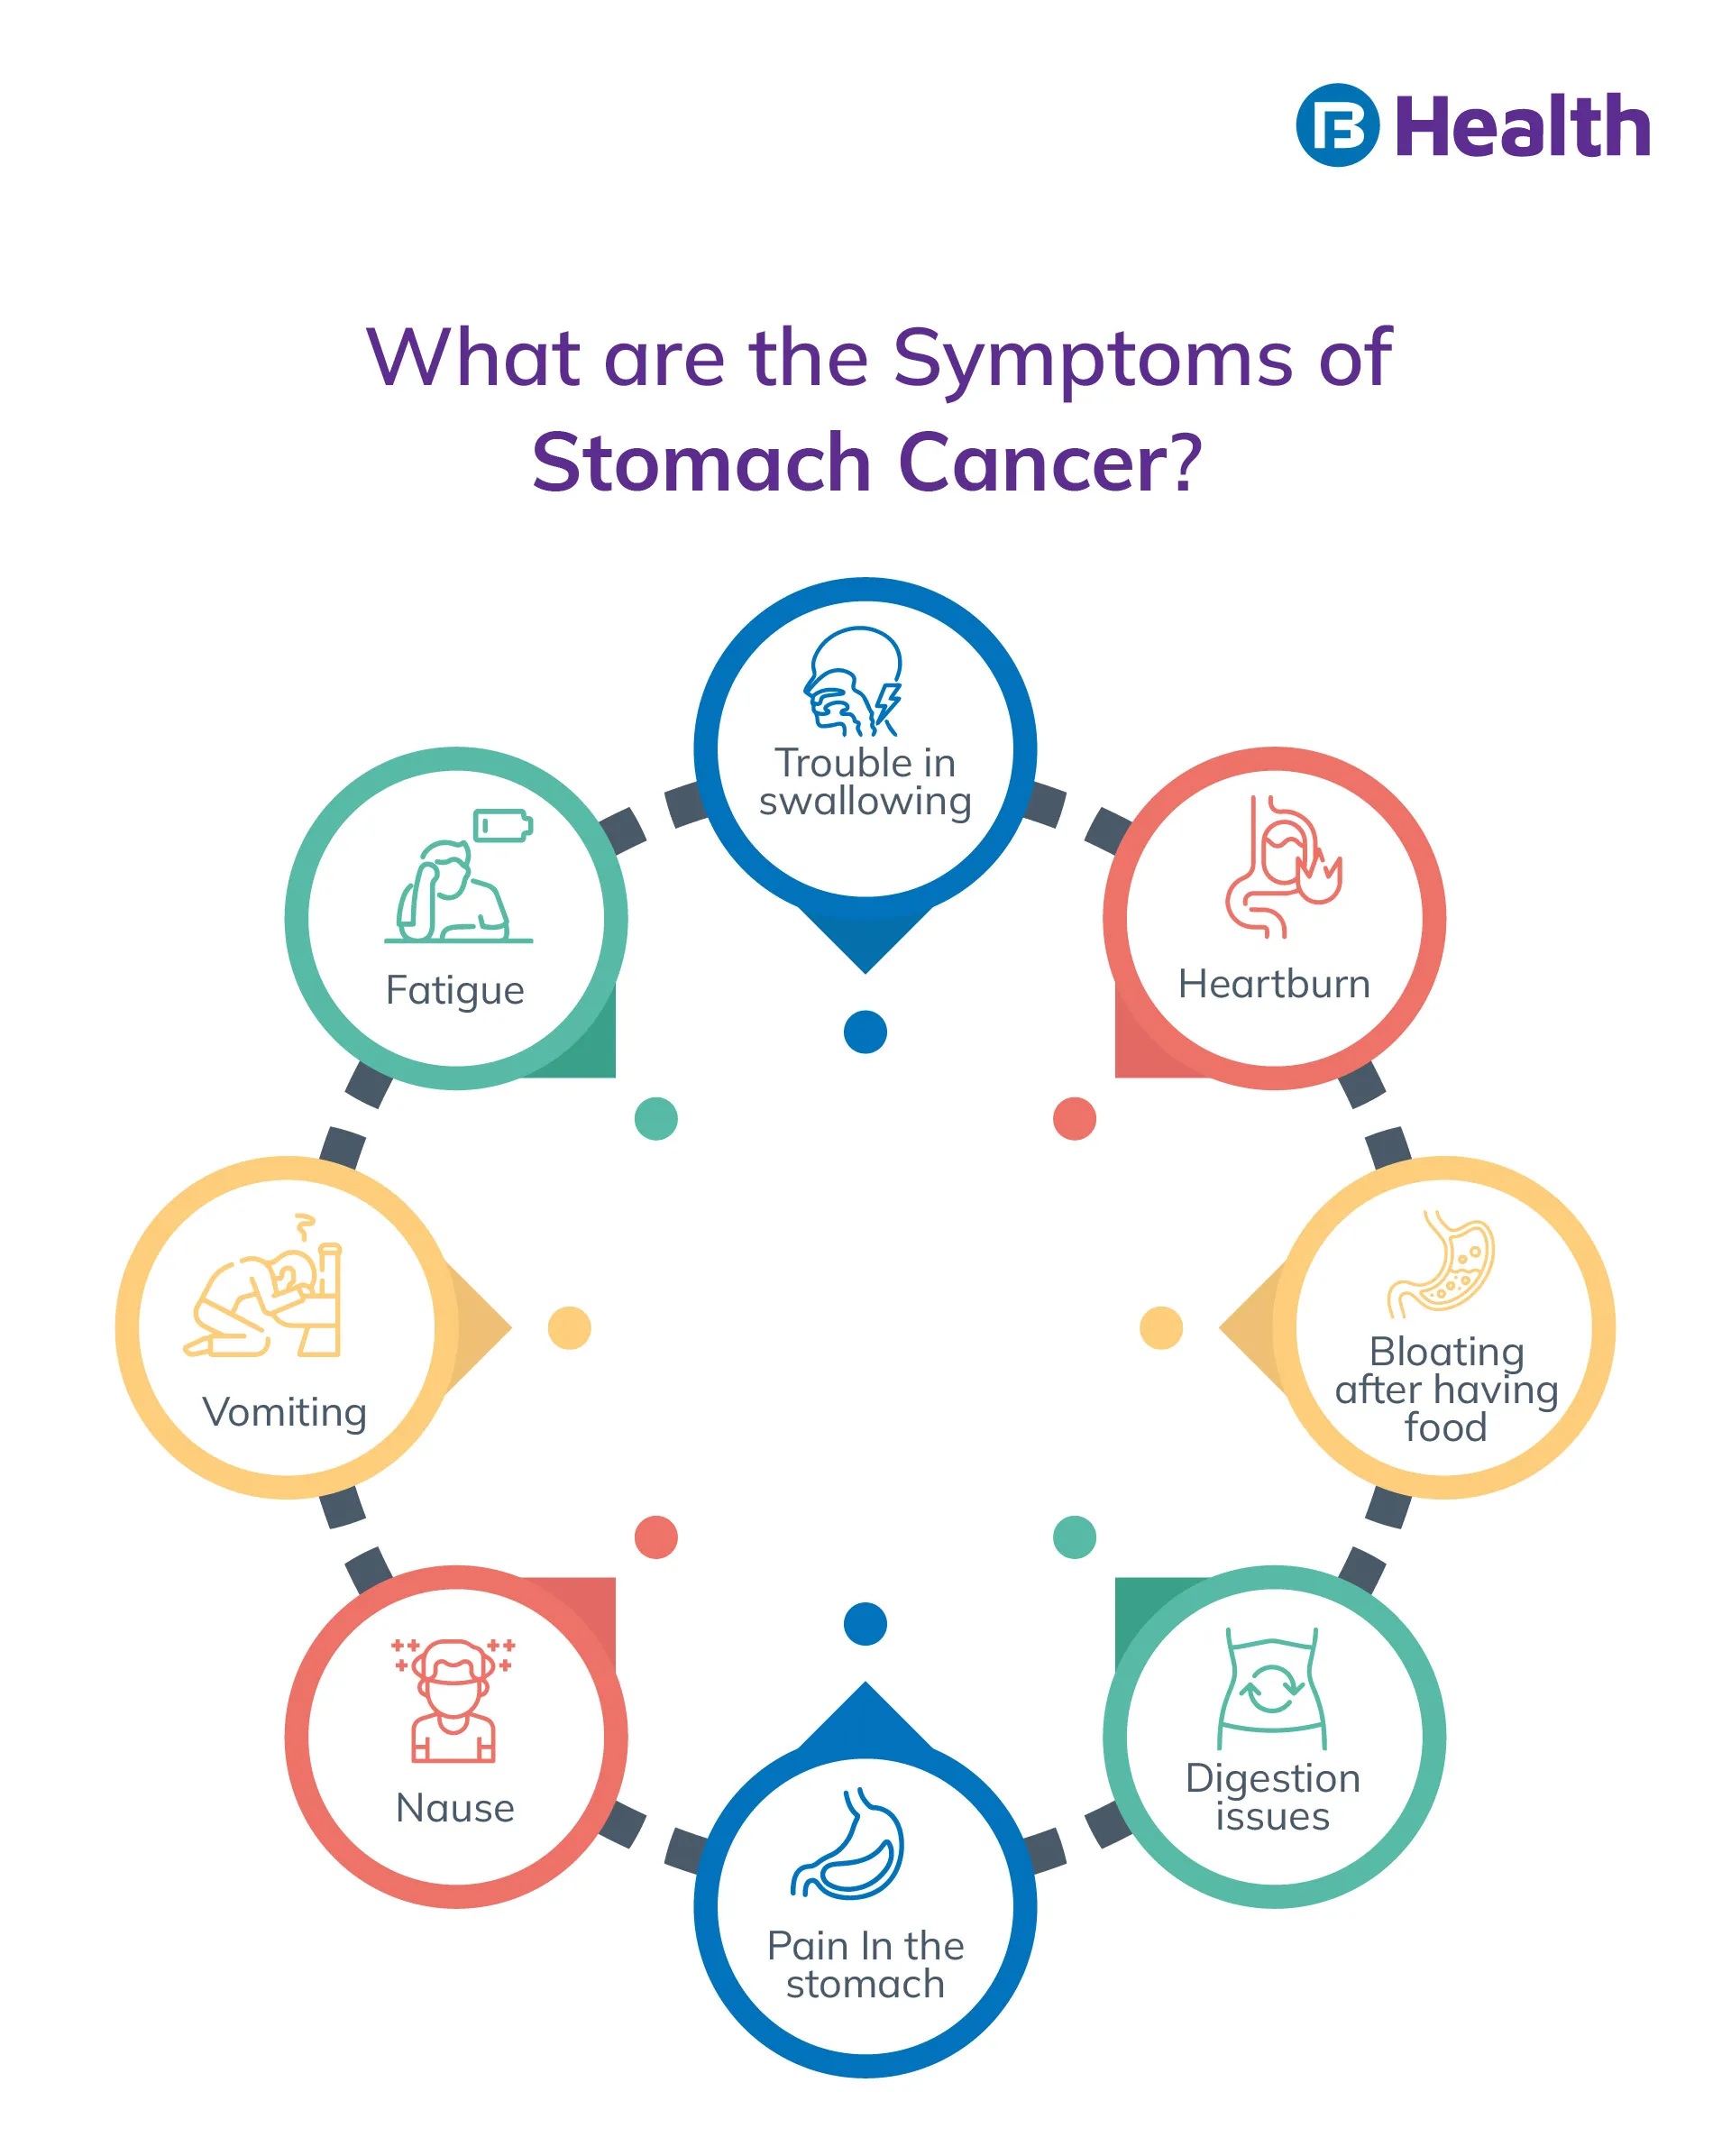 Stomach Cancer symptoms